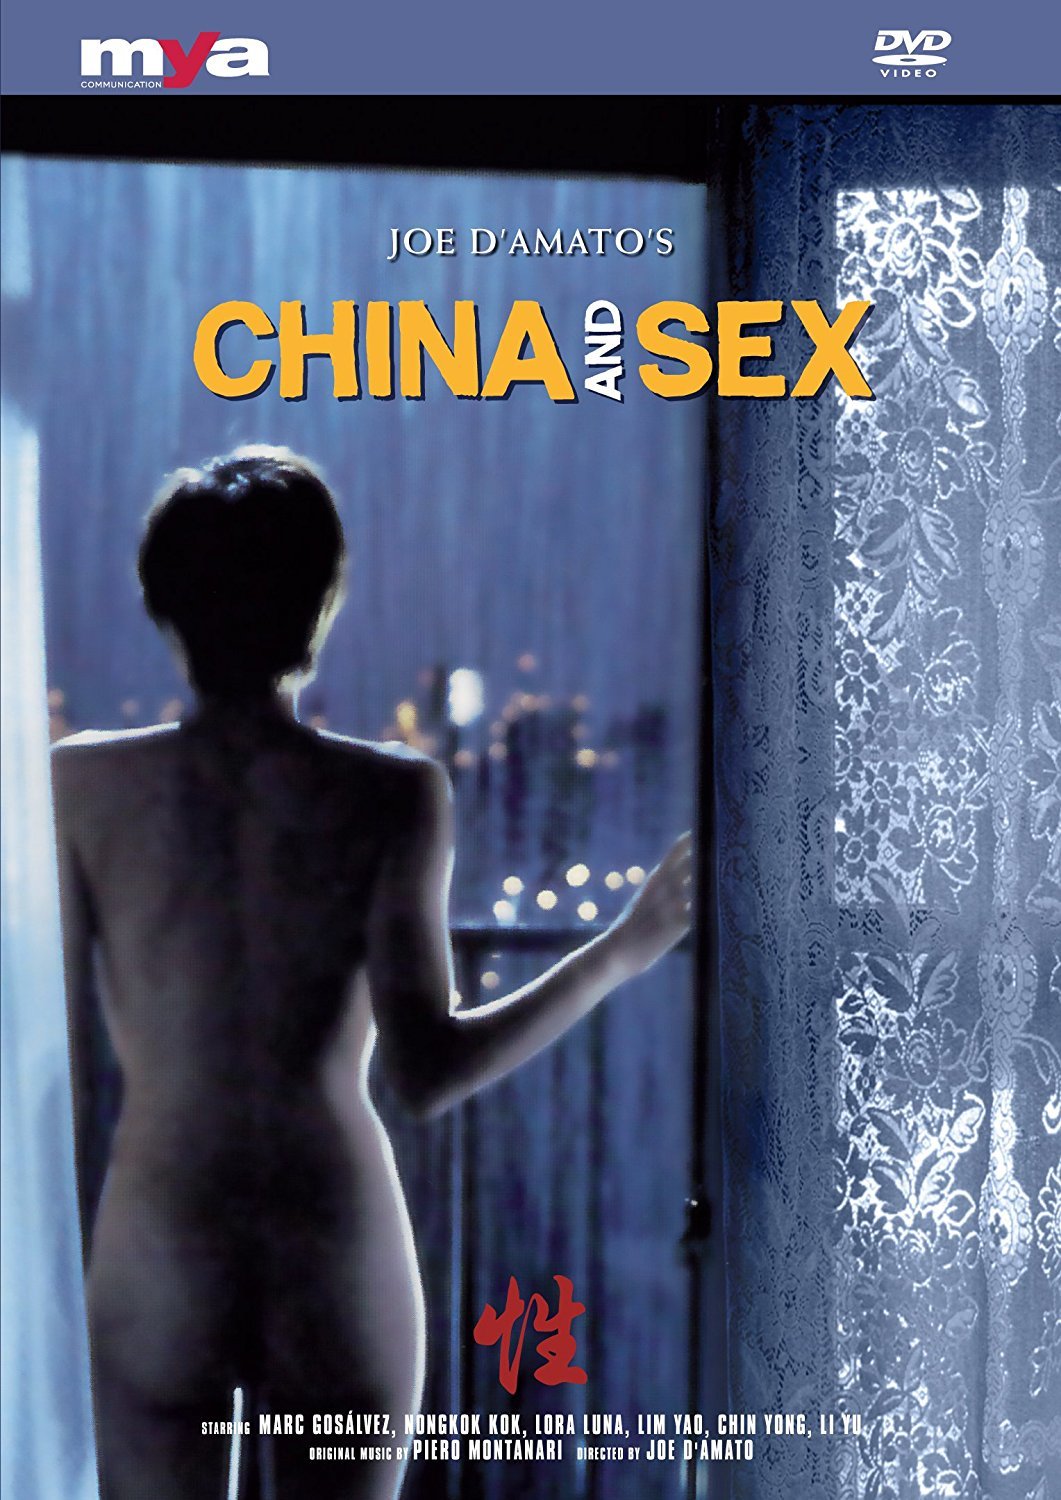 China and Sex (1994) Screenshot 1 